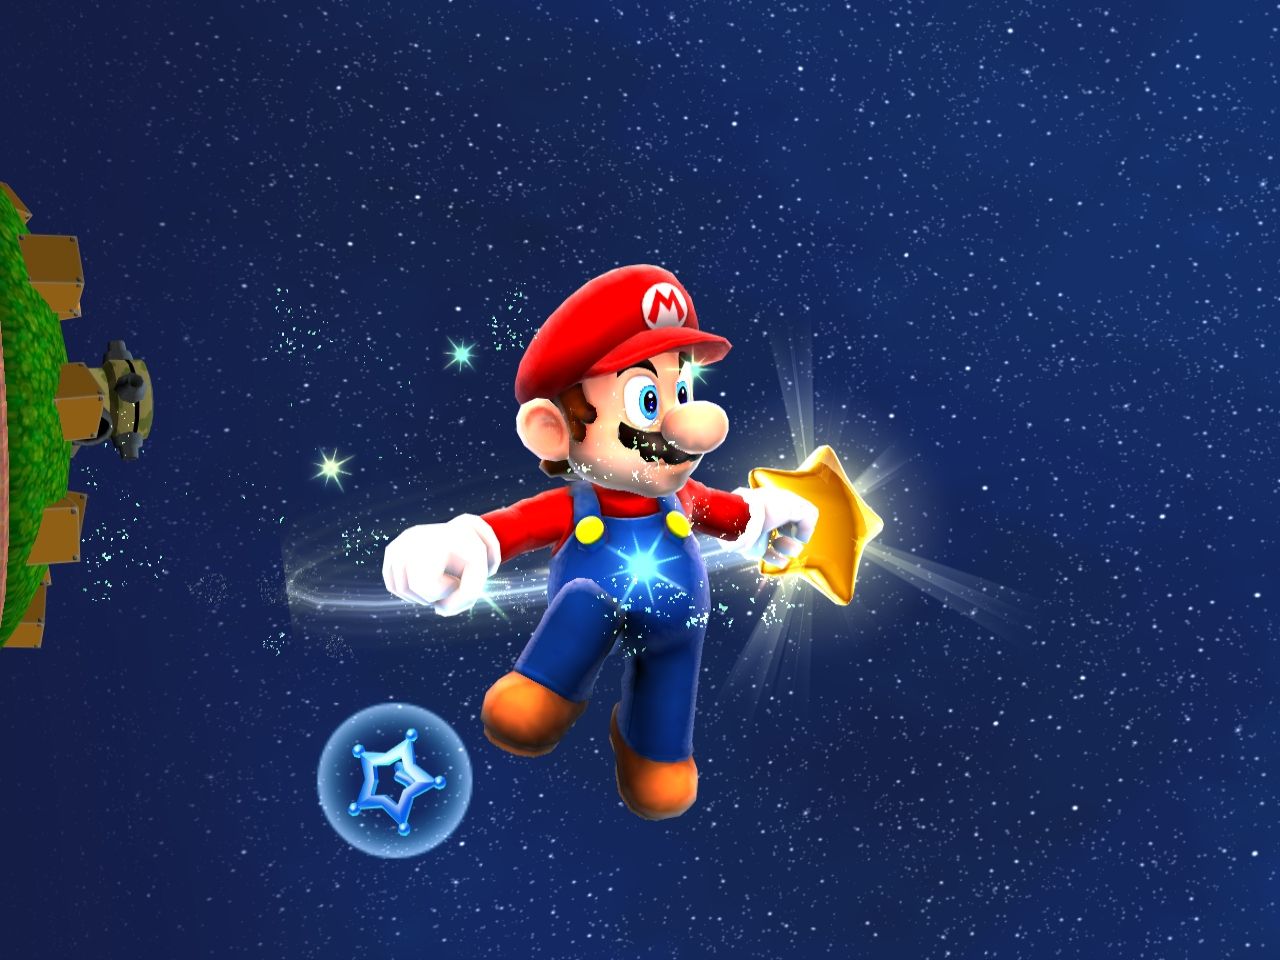 Super Mario Galaxy News and Media - GameGrep